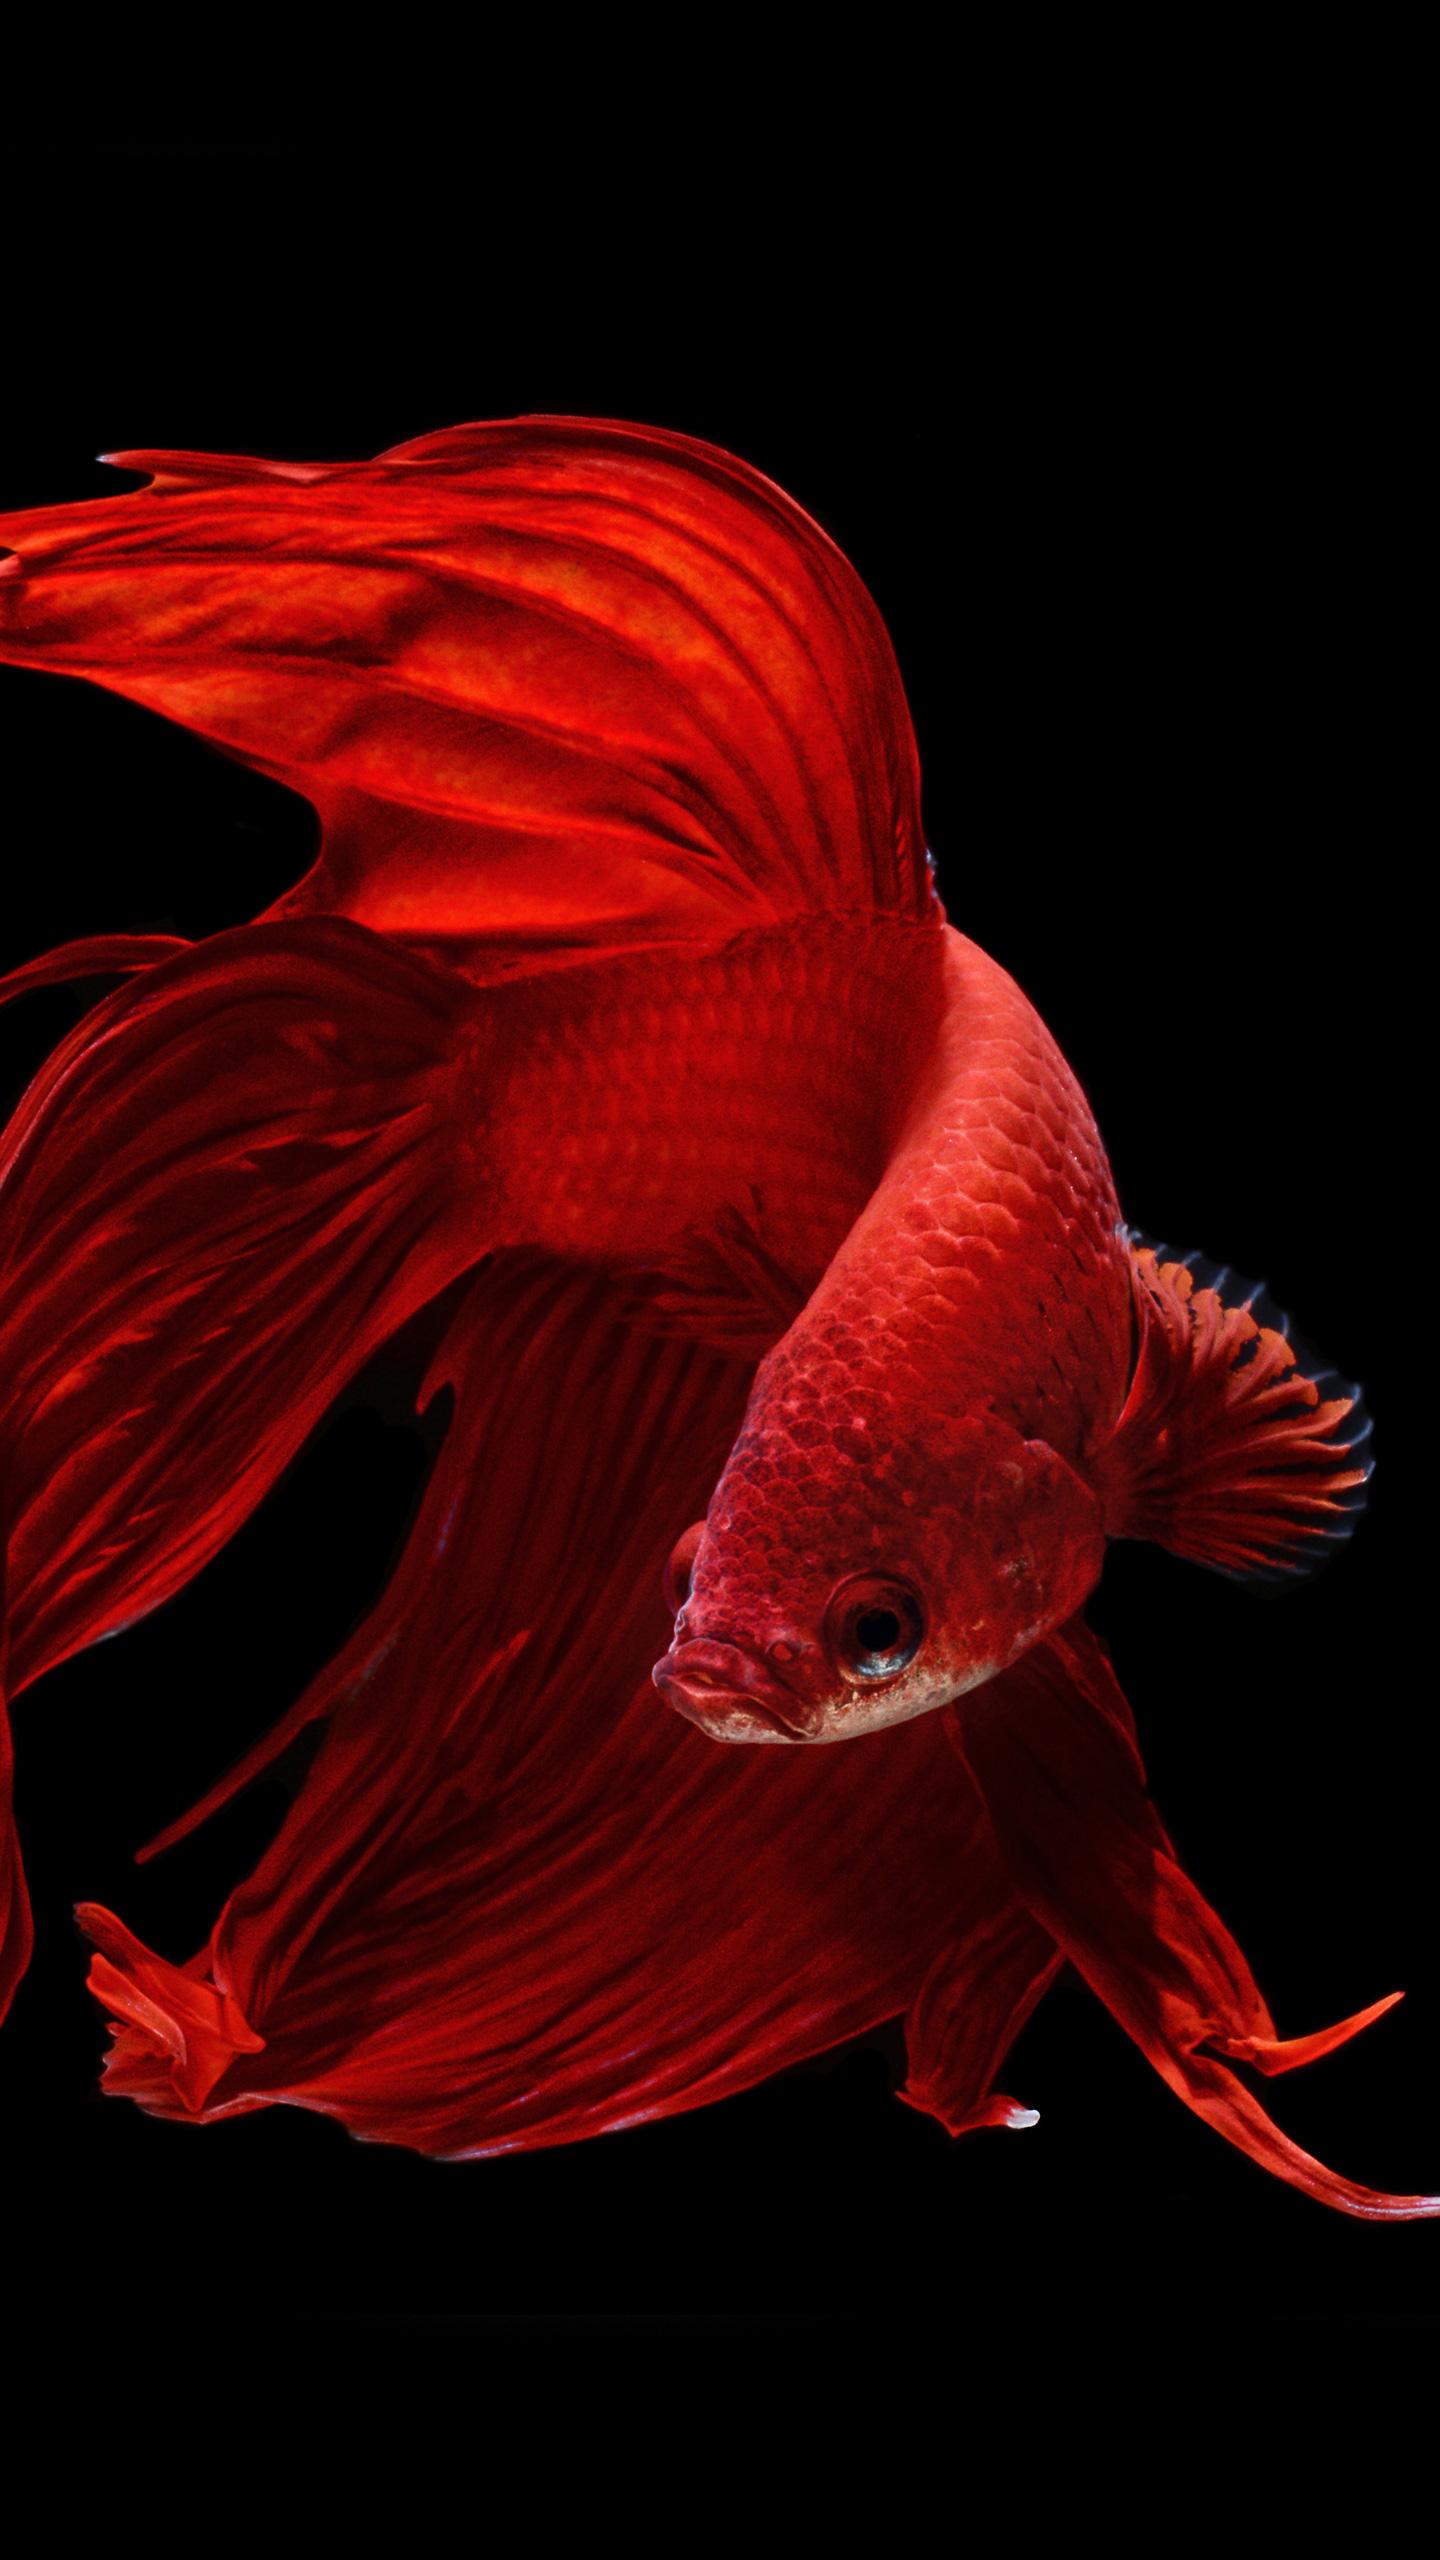 🔥 Red Amoled Wallpaper 4k Ultra HD Free Download